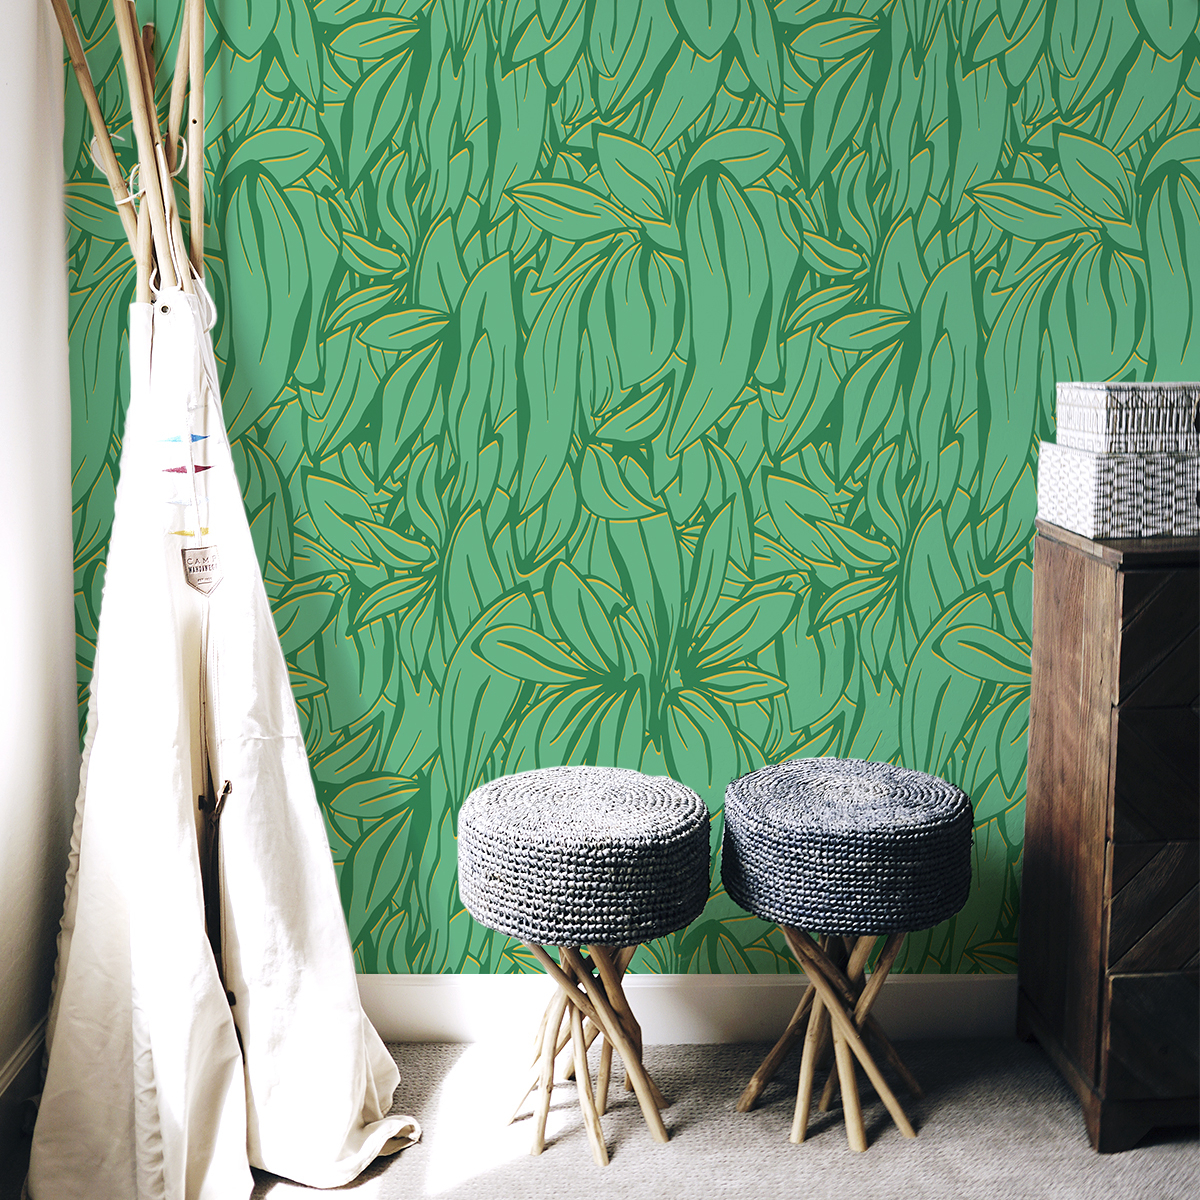 Panoramic Fantaisie végétale wallpaper - Lili Bambou Design collection - Acte-Deco